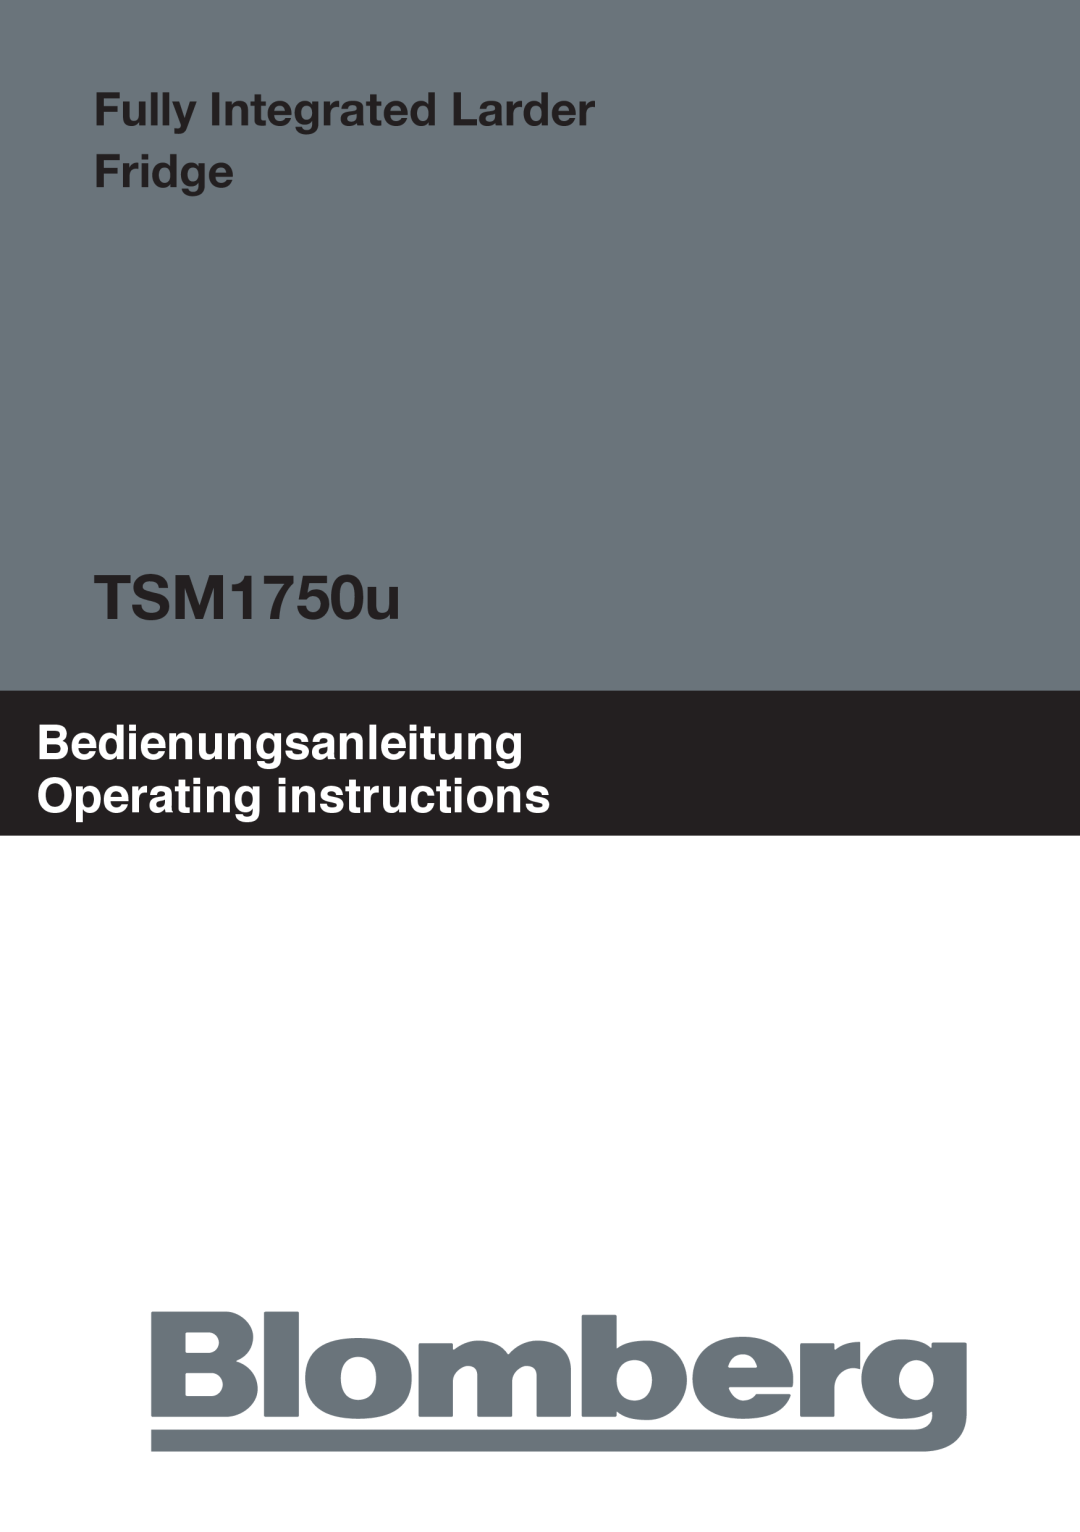 Blomberg TSM1750u manual Bedienungsanleitung Operating instructions, Fully Integrated Larder Fridge 